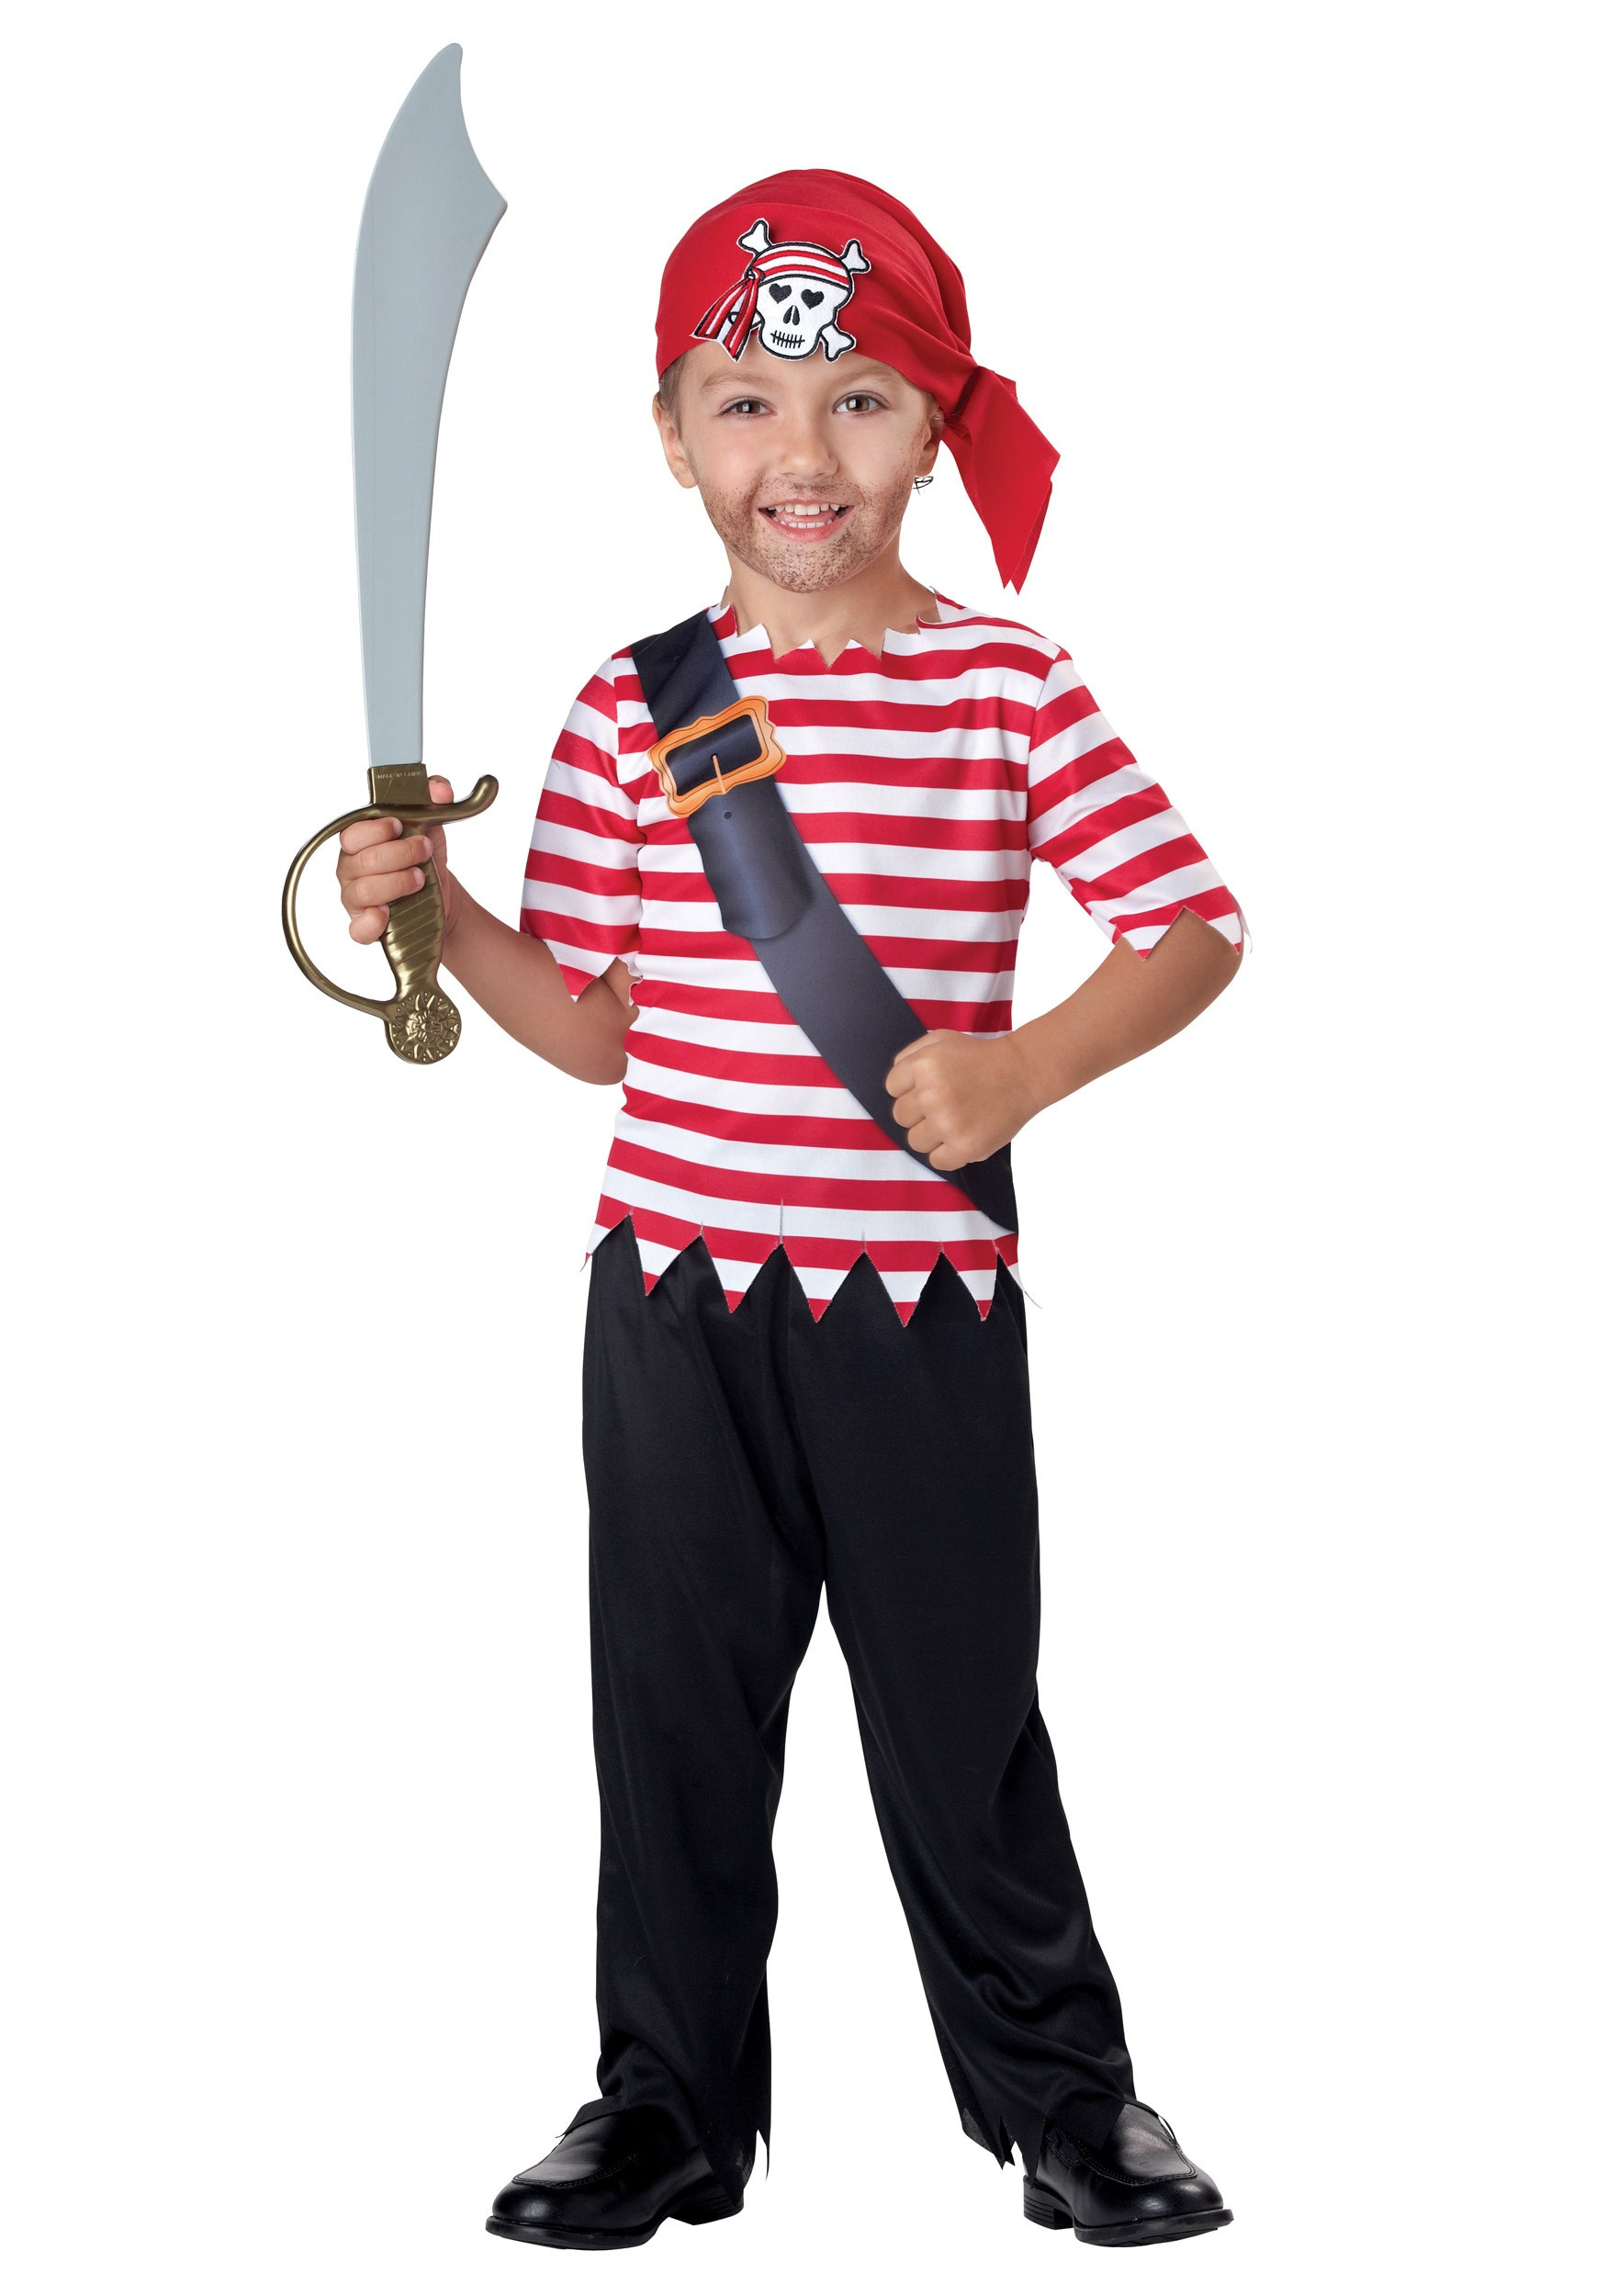 DIY Toddler Pirate Costume
 Toddler Pirate Costume